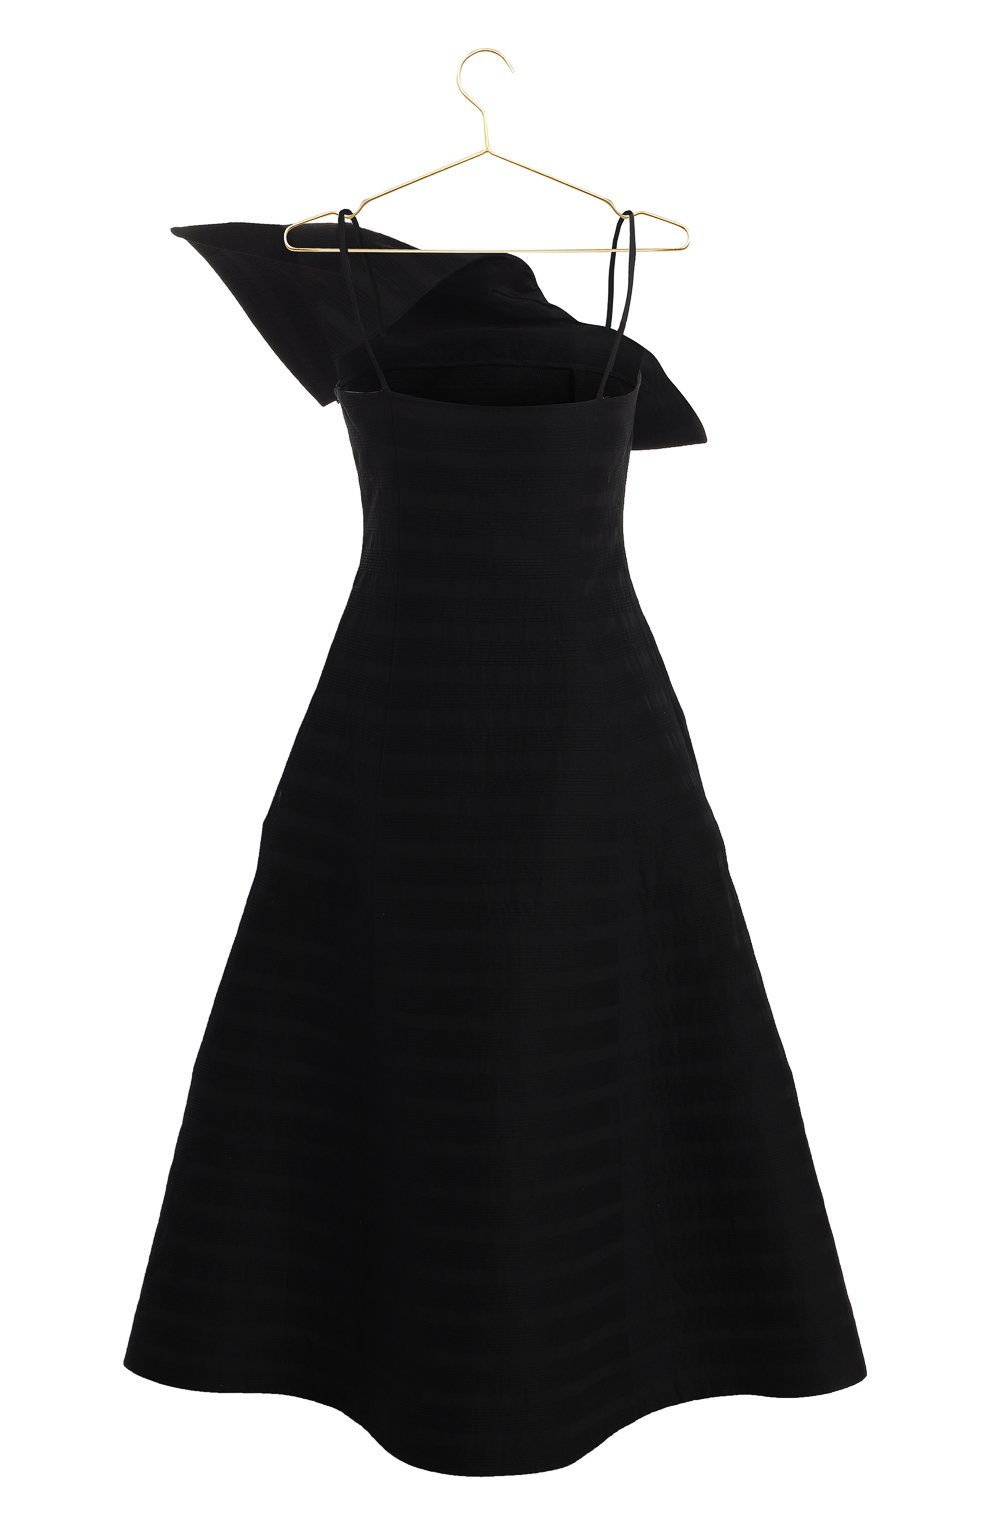 Платье из хлопка и шелка | Vika Gazinskaya | Чёрный - 2